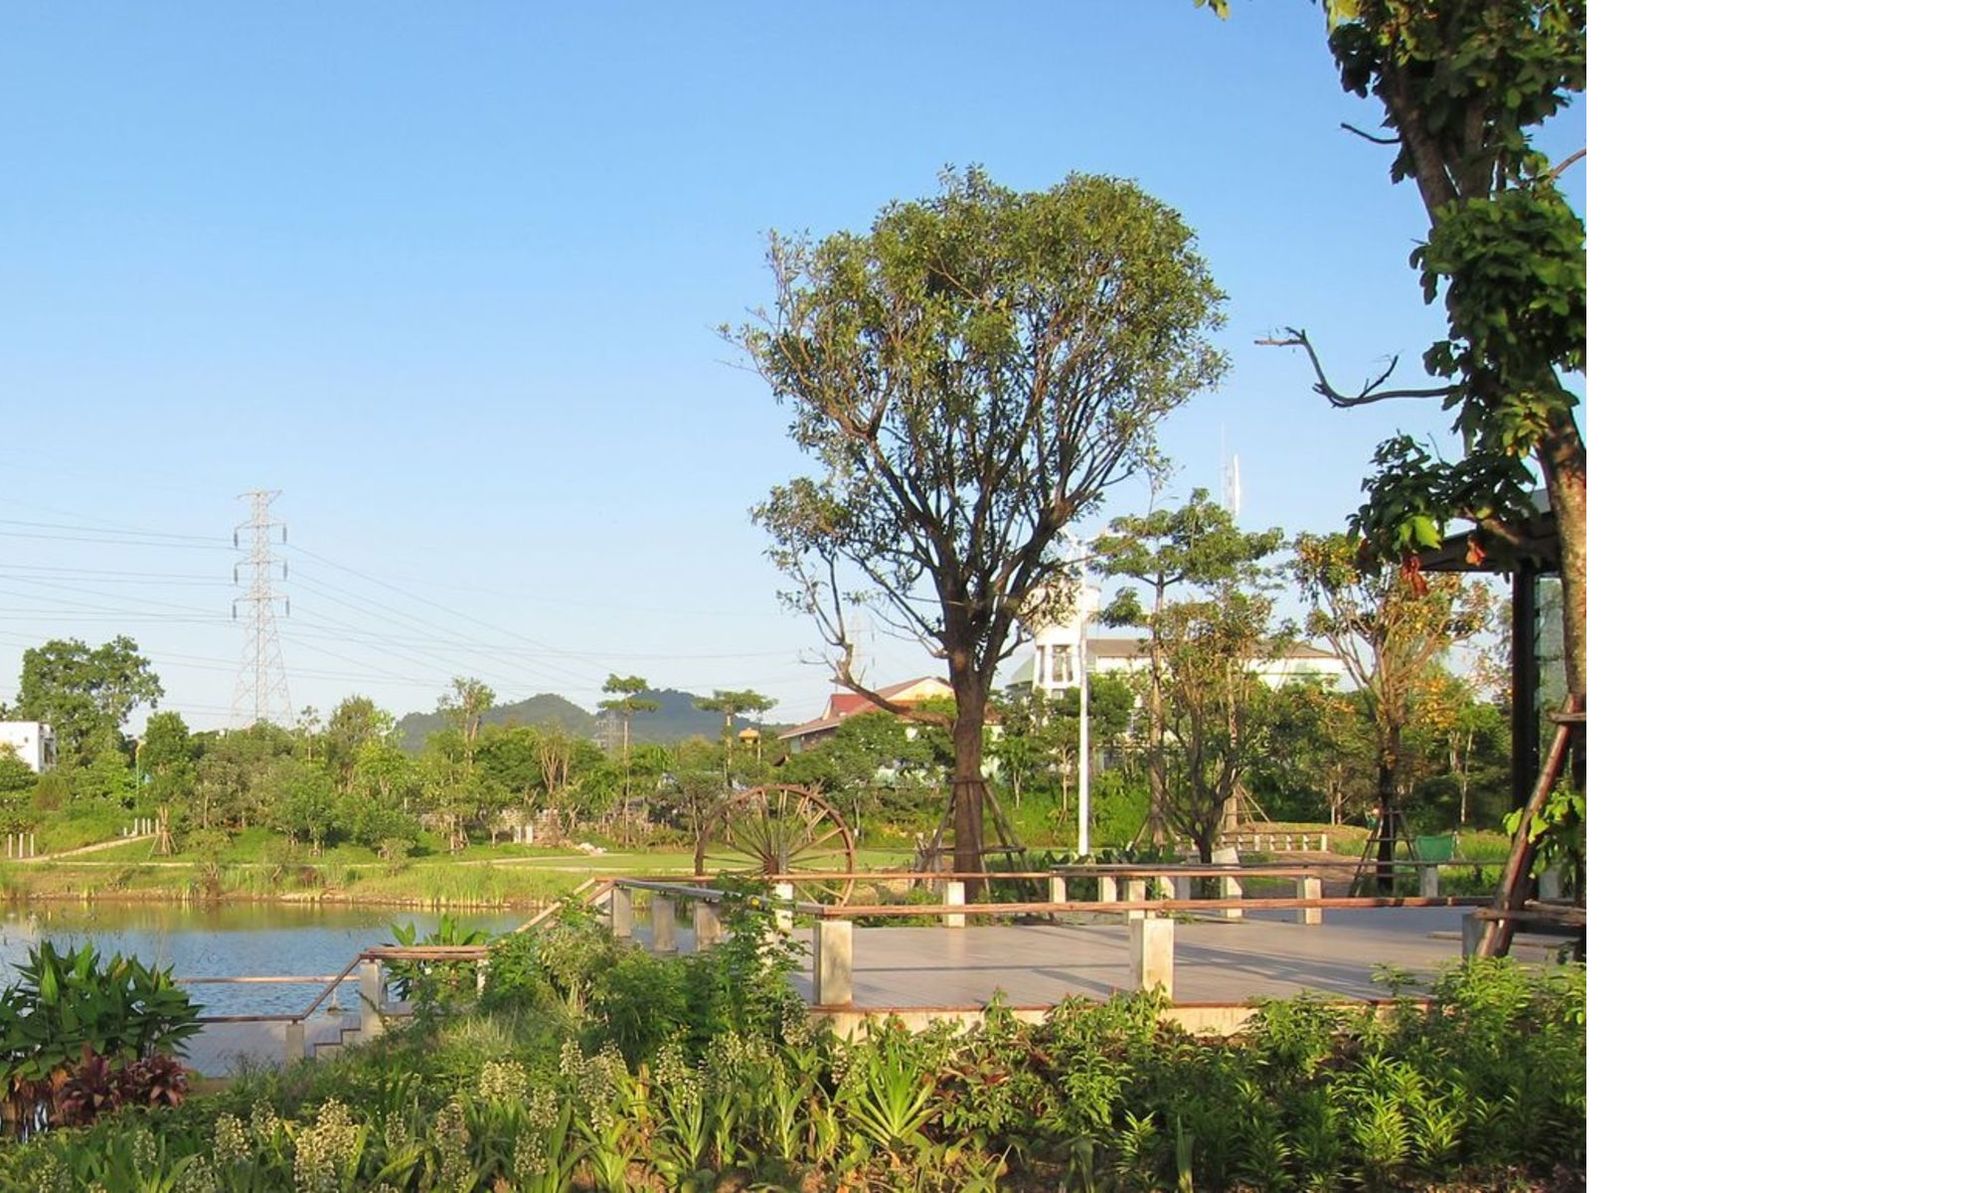 Ming Mongkol Green Park 2015 Thailand Landscape Architecture Awards Livegreenblog